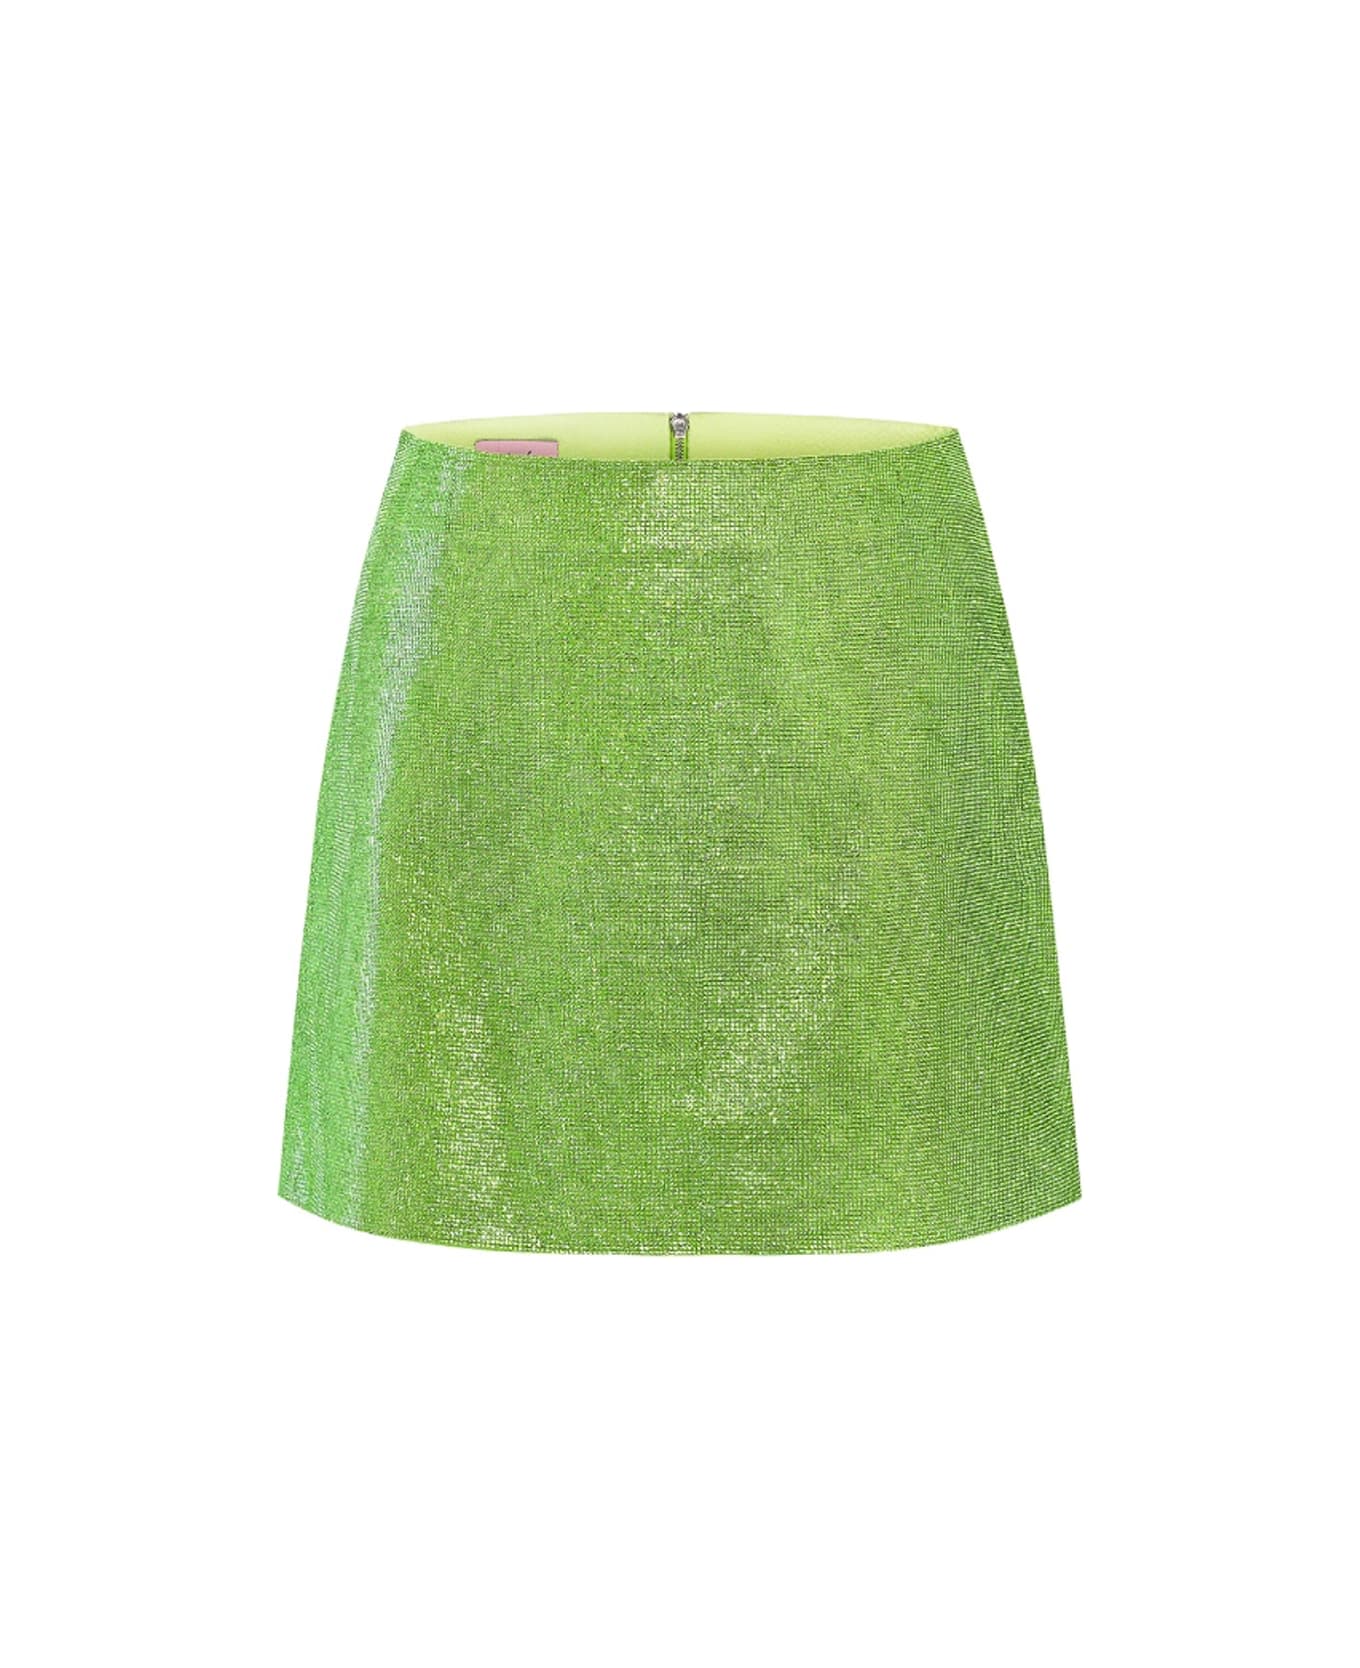 Nué Camille Skirt Neon Green - Green スカート